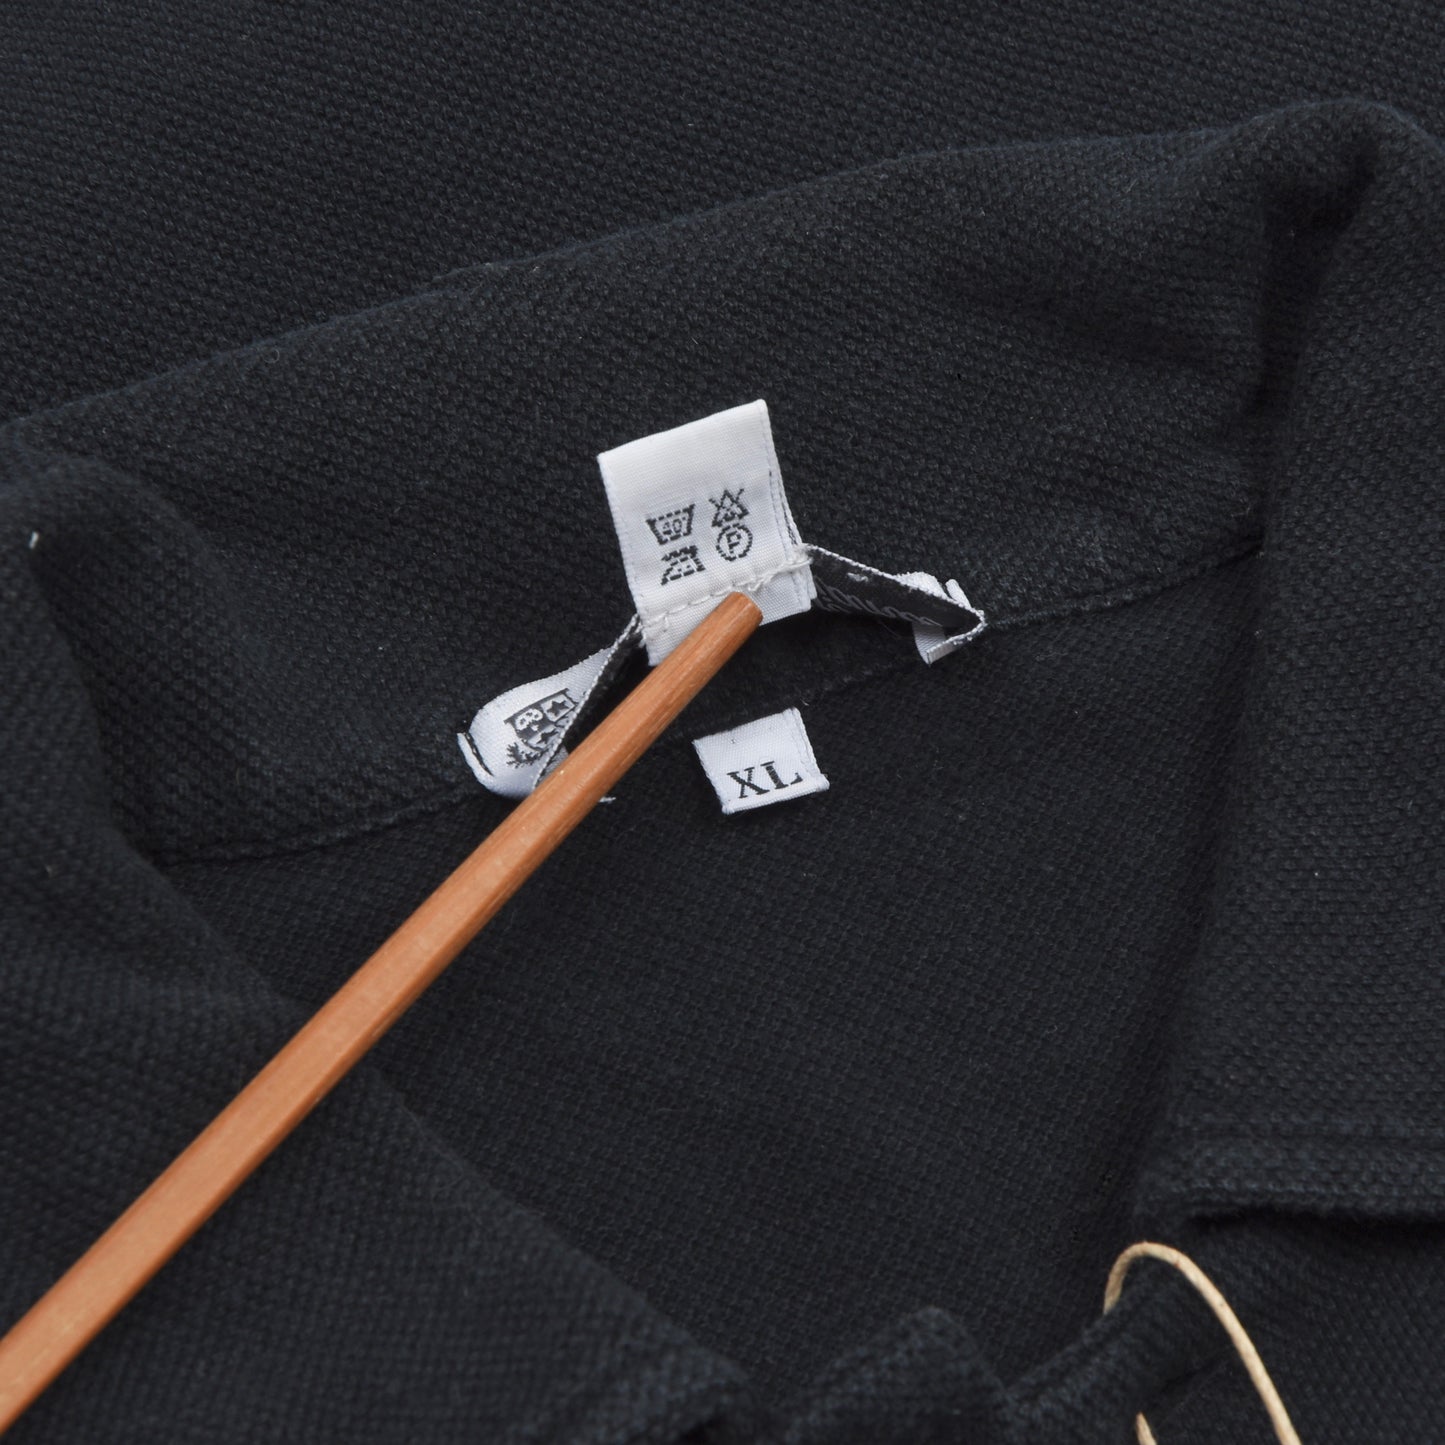 Loro Piana Polo Shirt Size XL - Black